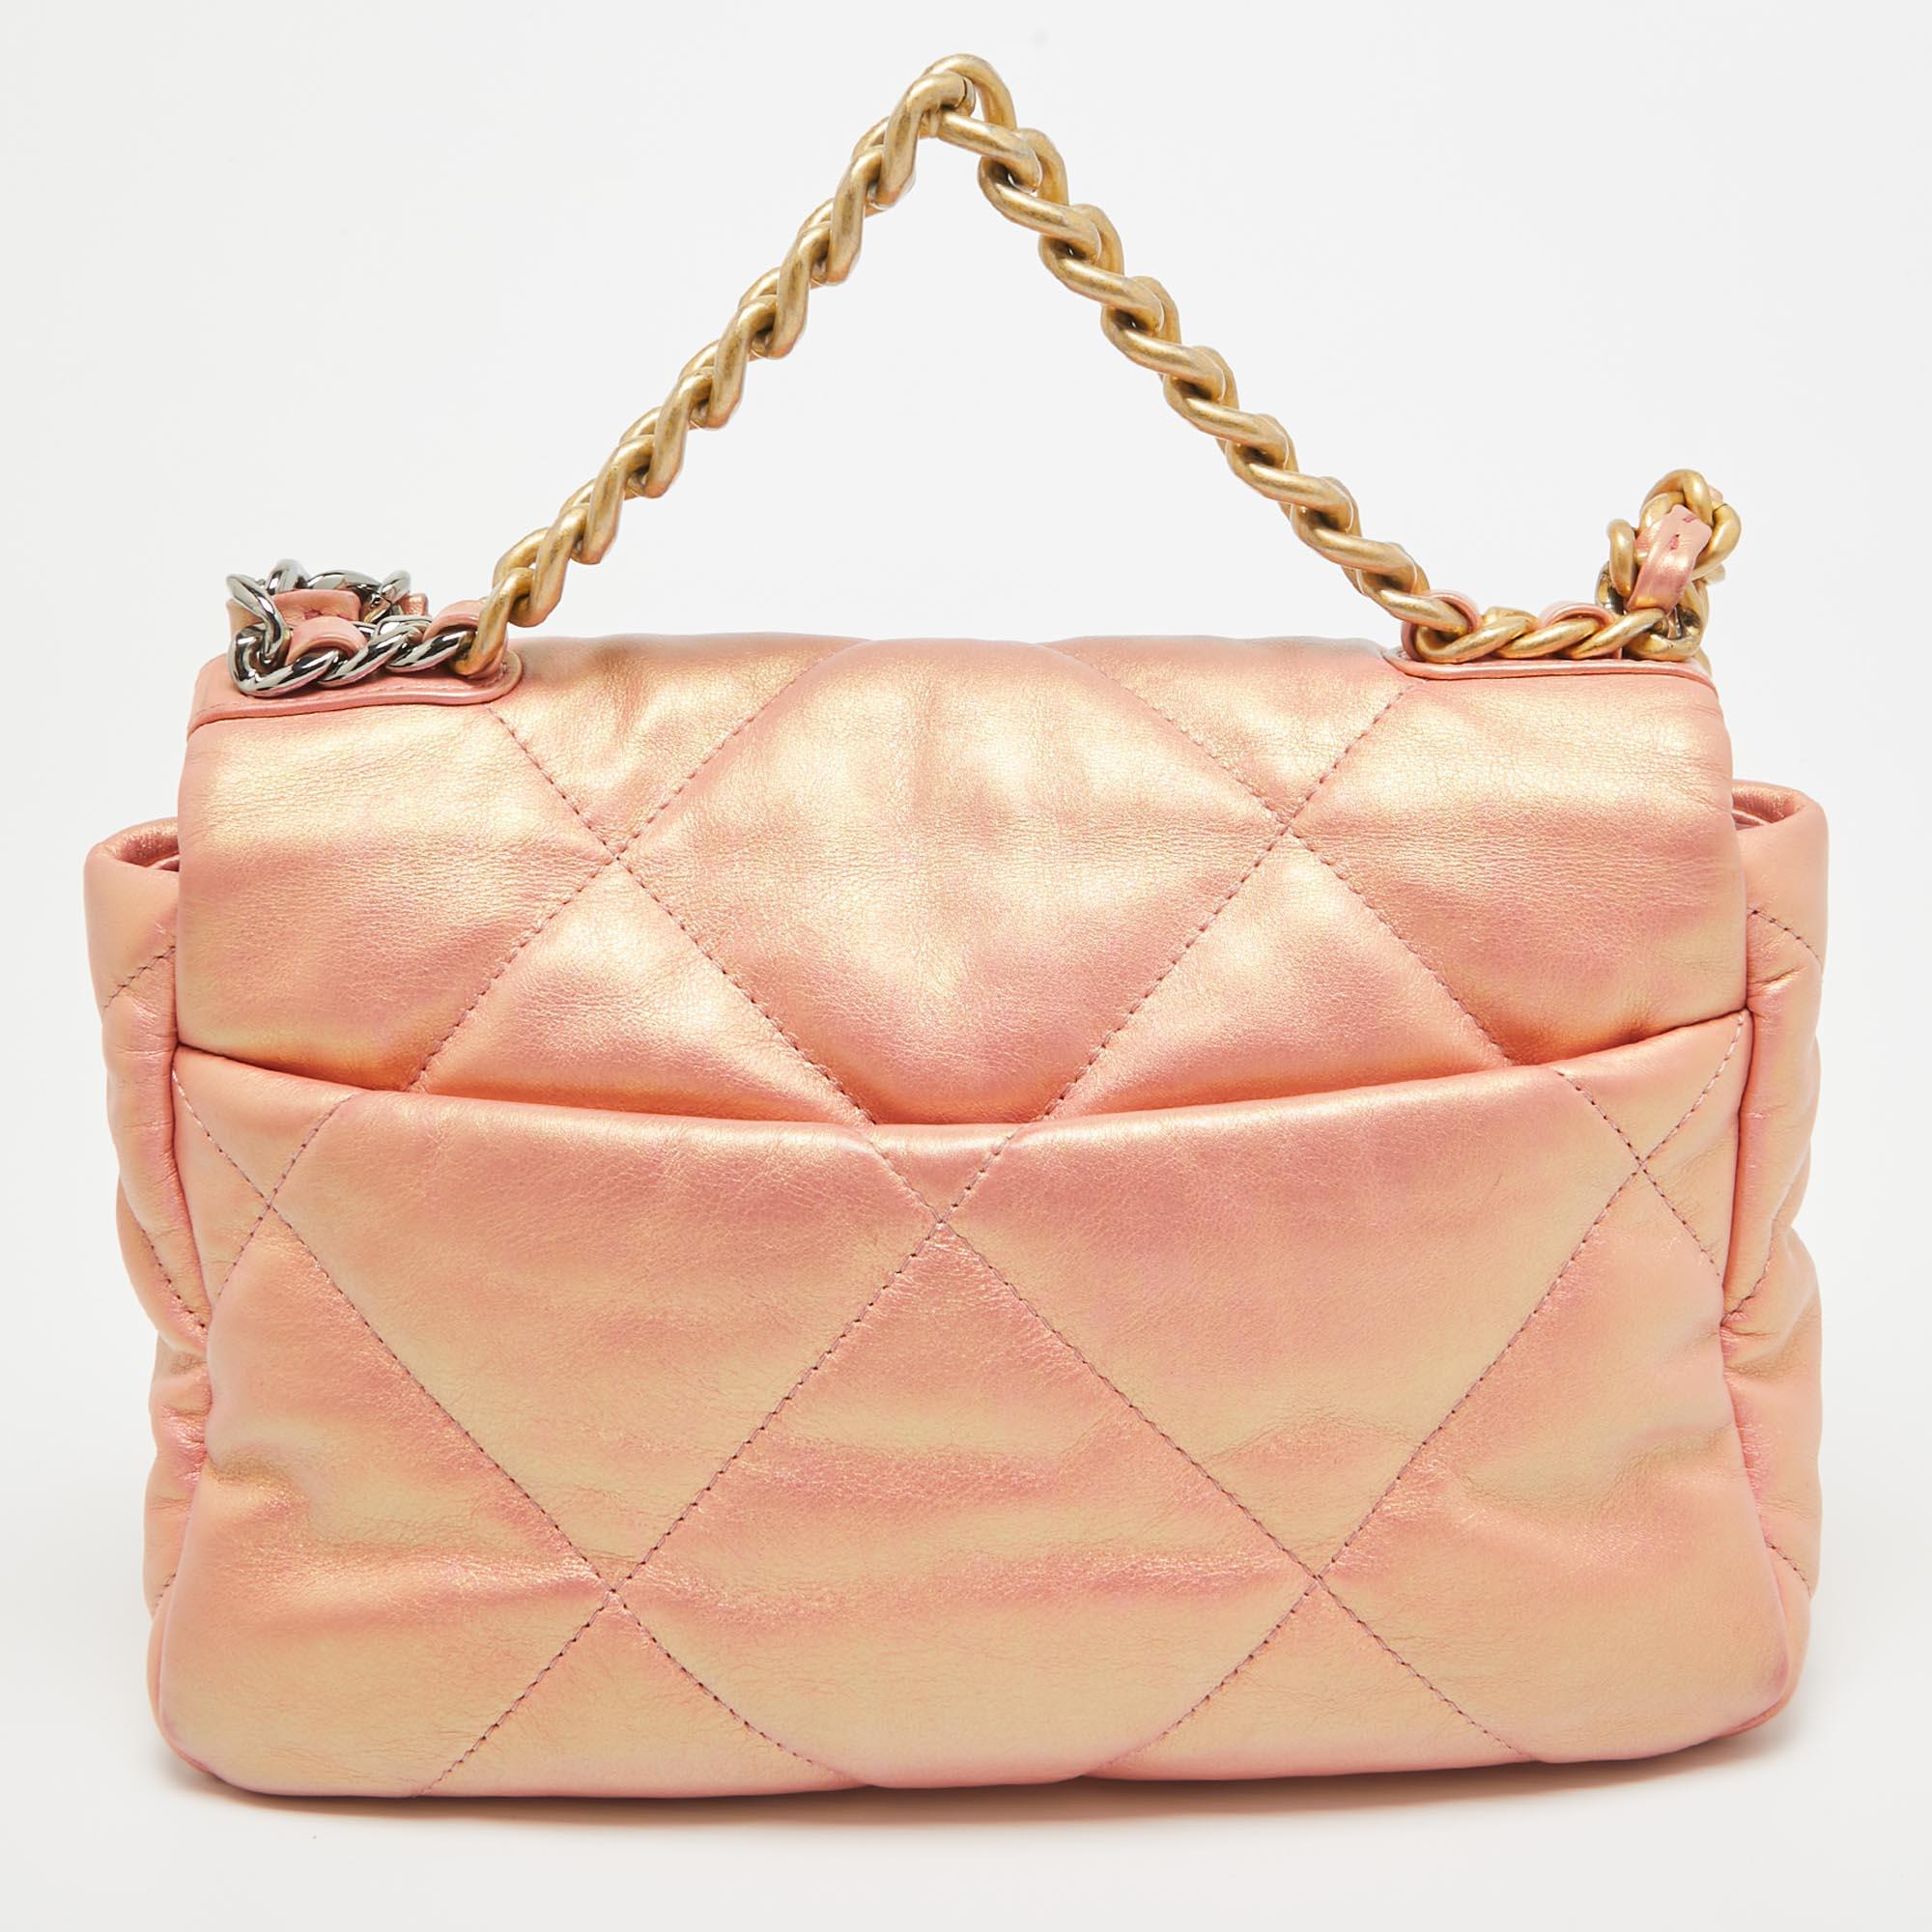 Chanel Orange Iridescent Quilted Leather Medium 19 Flap Bag 9